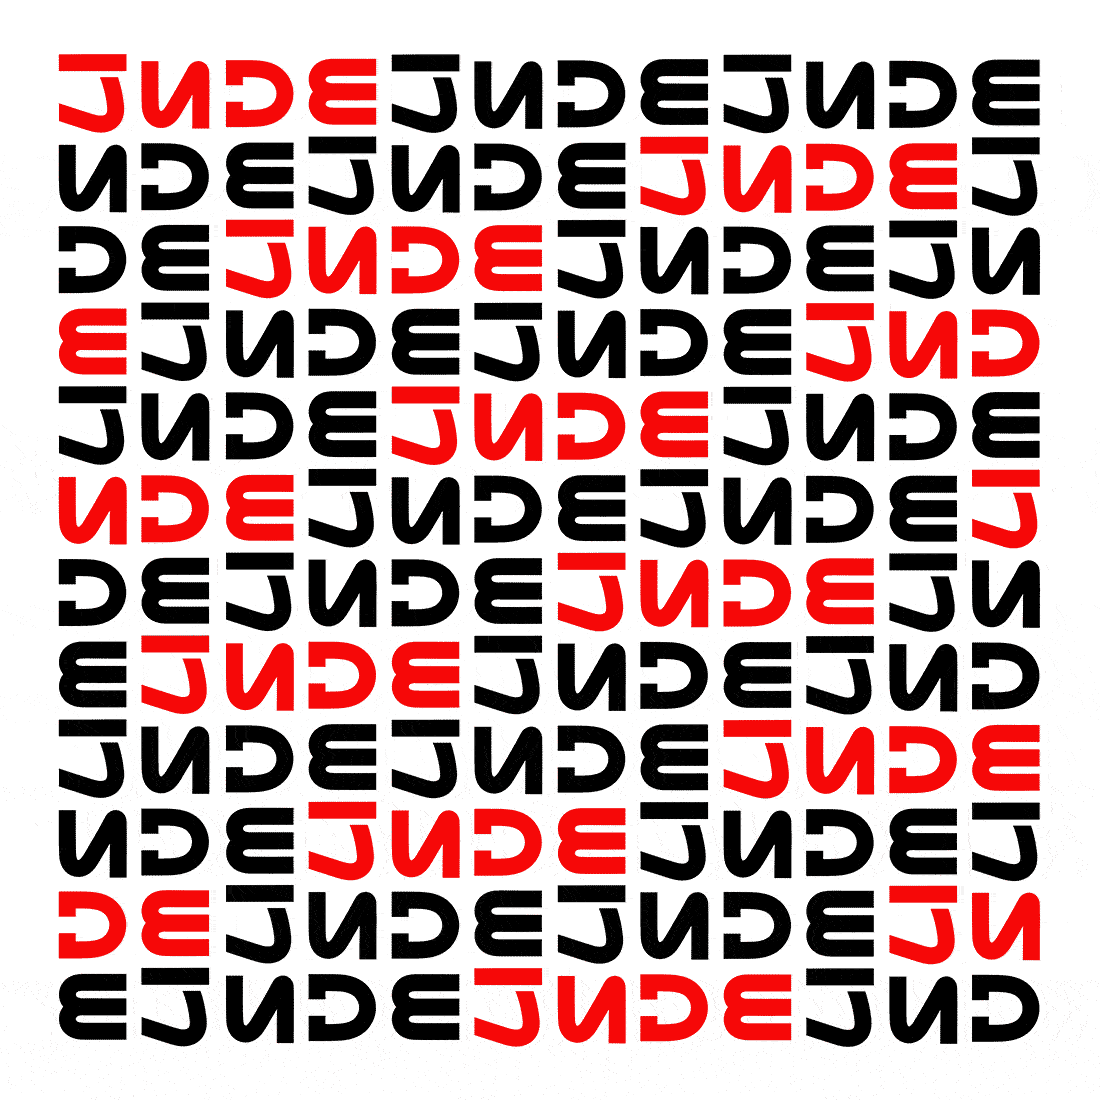 ambigram Jude Muslim black red